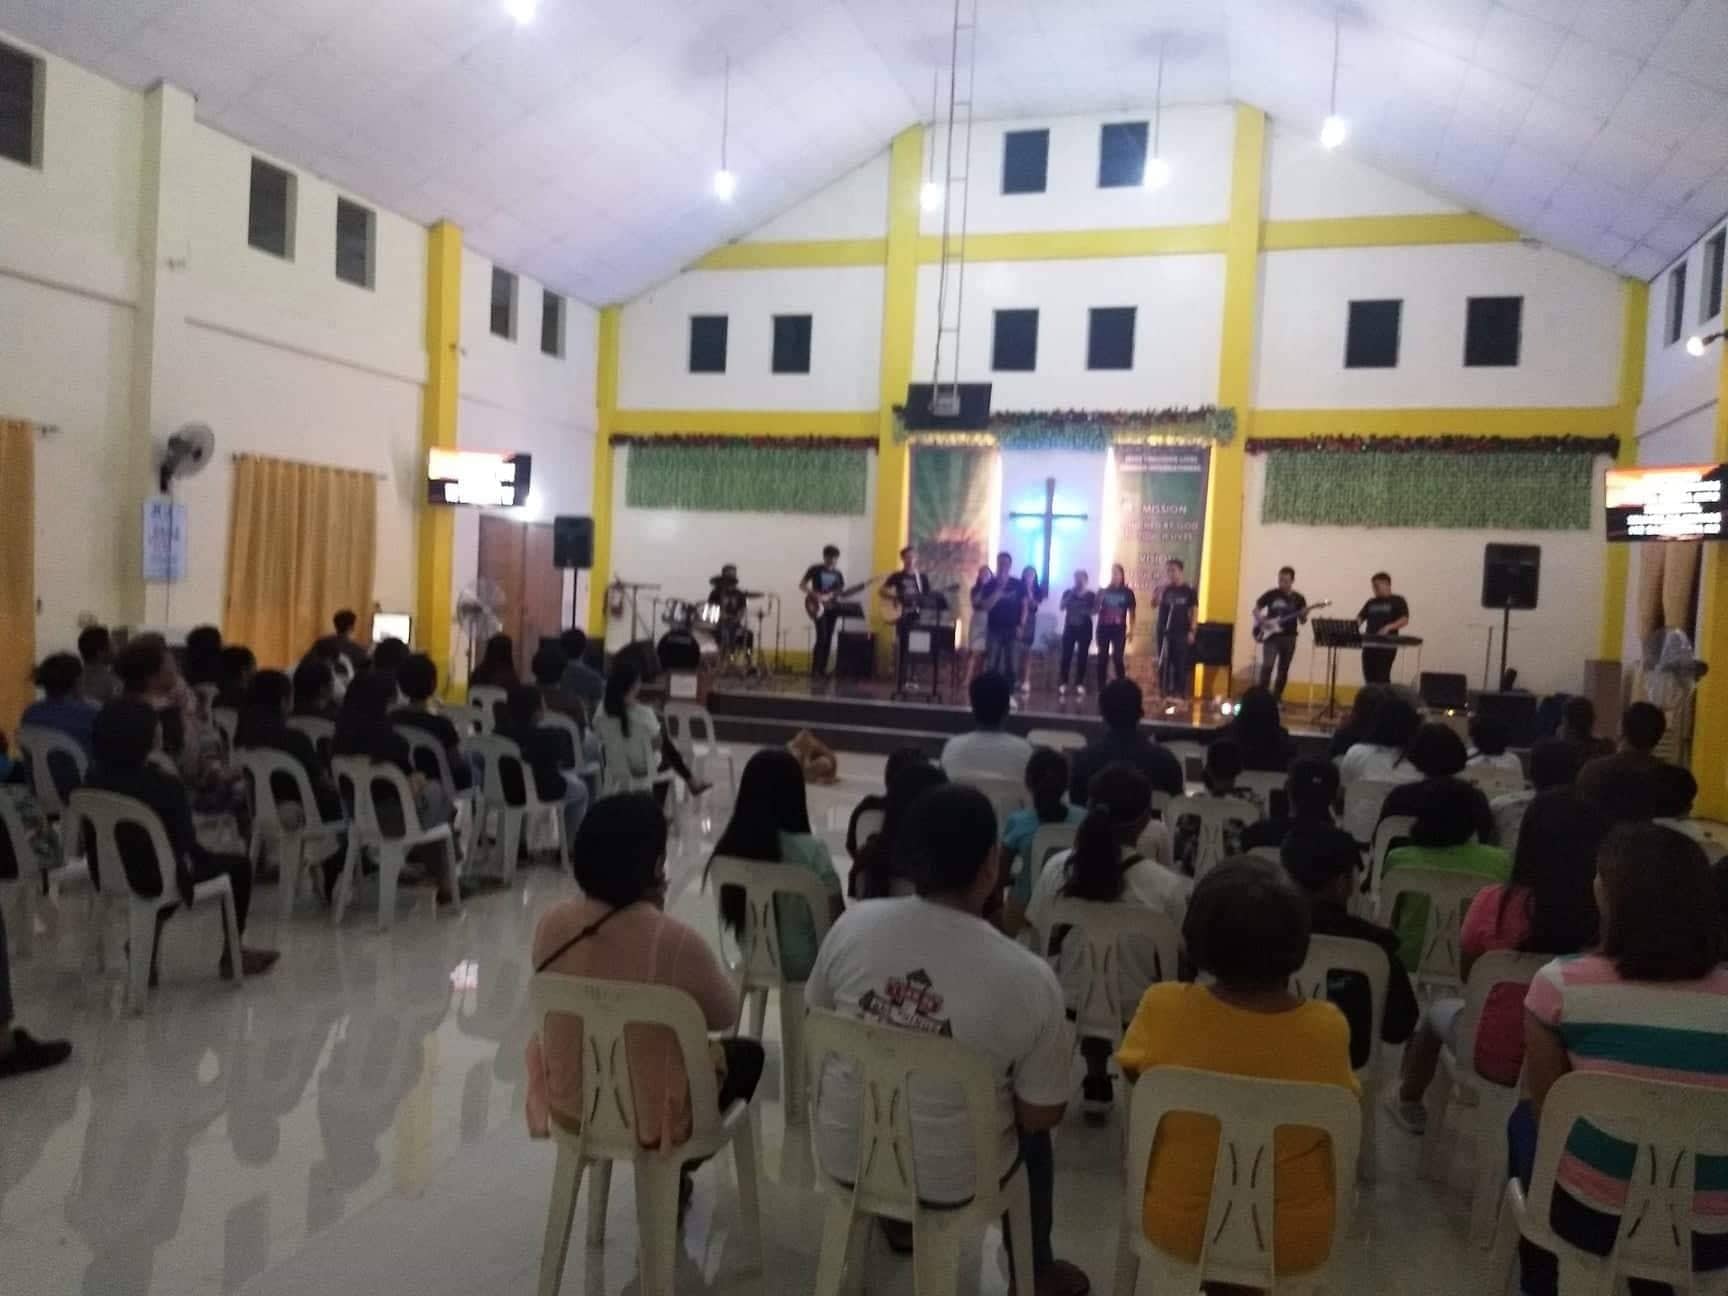 Jesus Touching Lives Church International